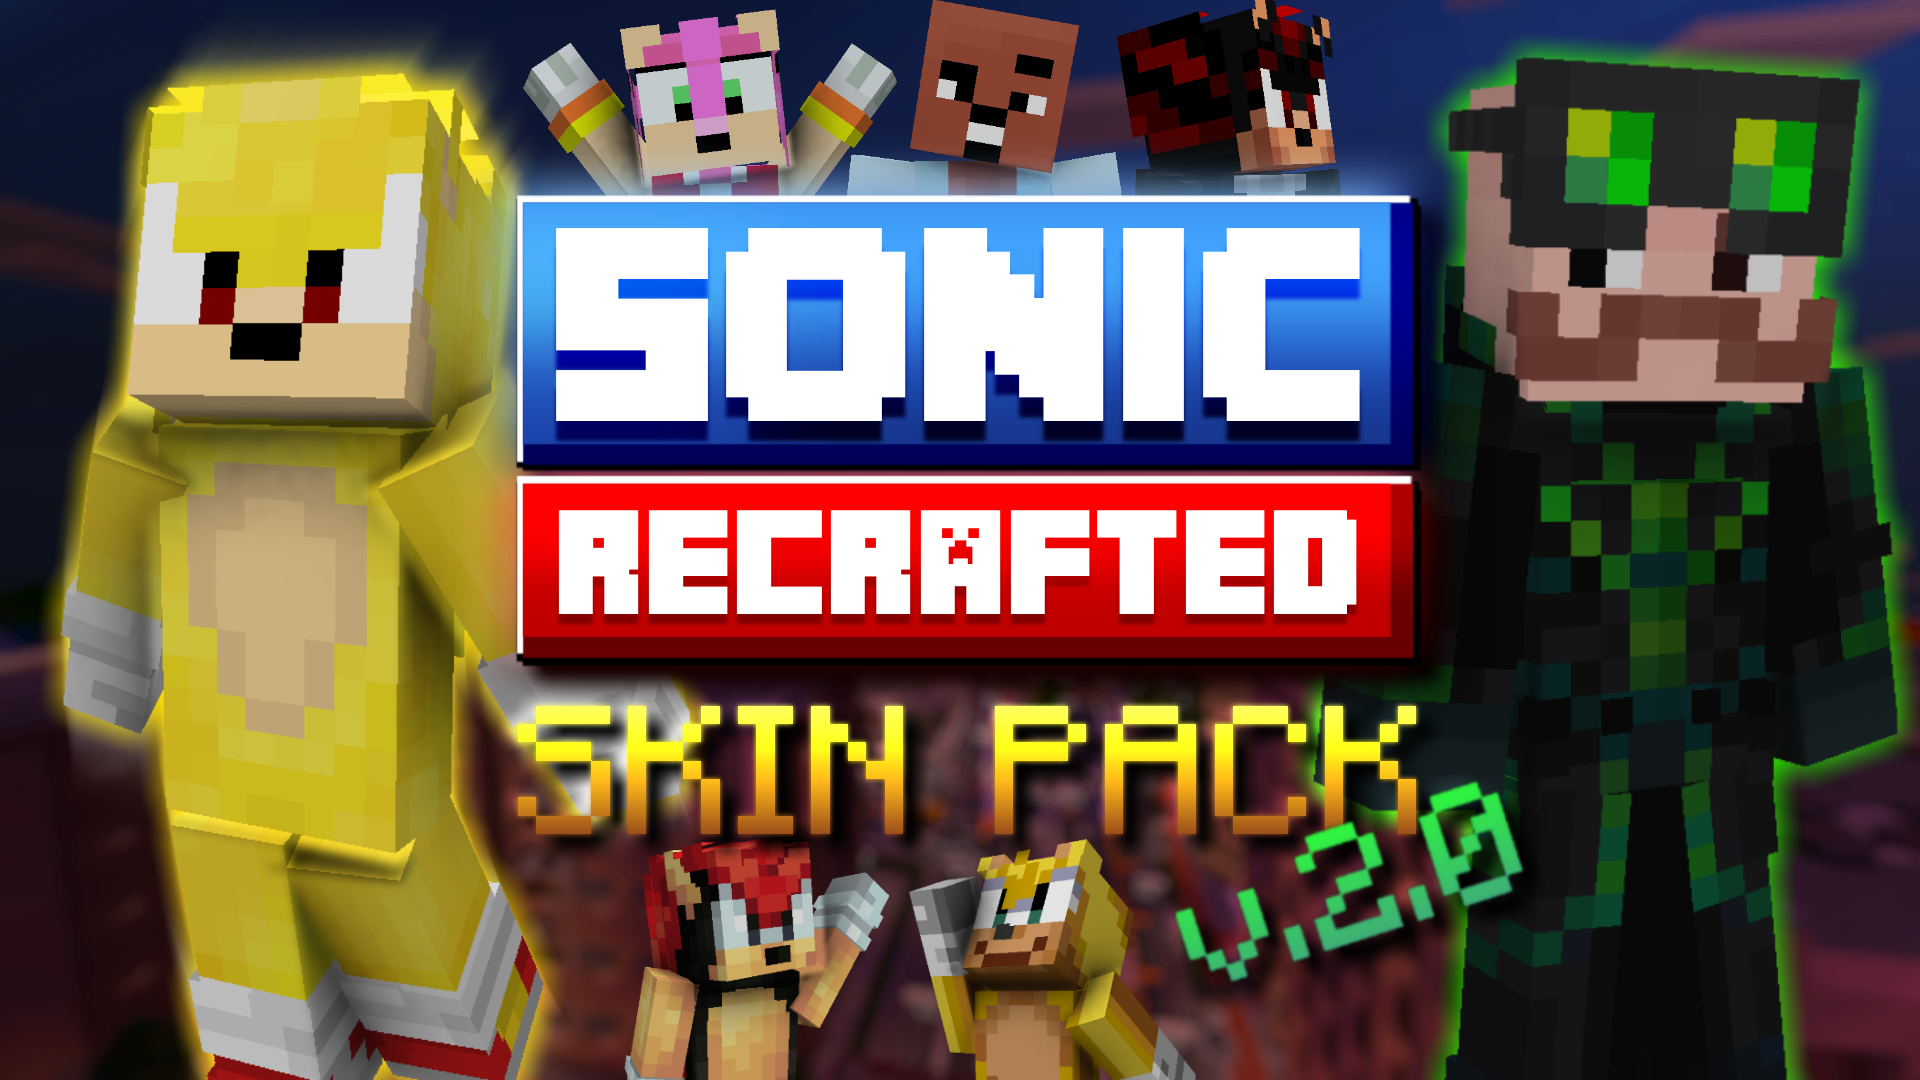 Buy Minecraft Skin Pack 2